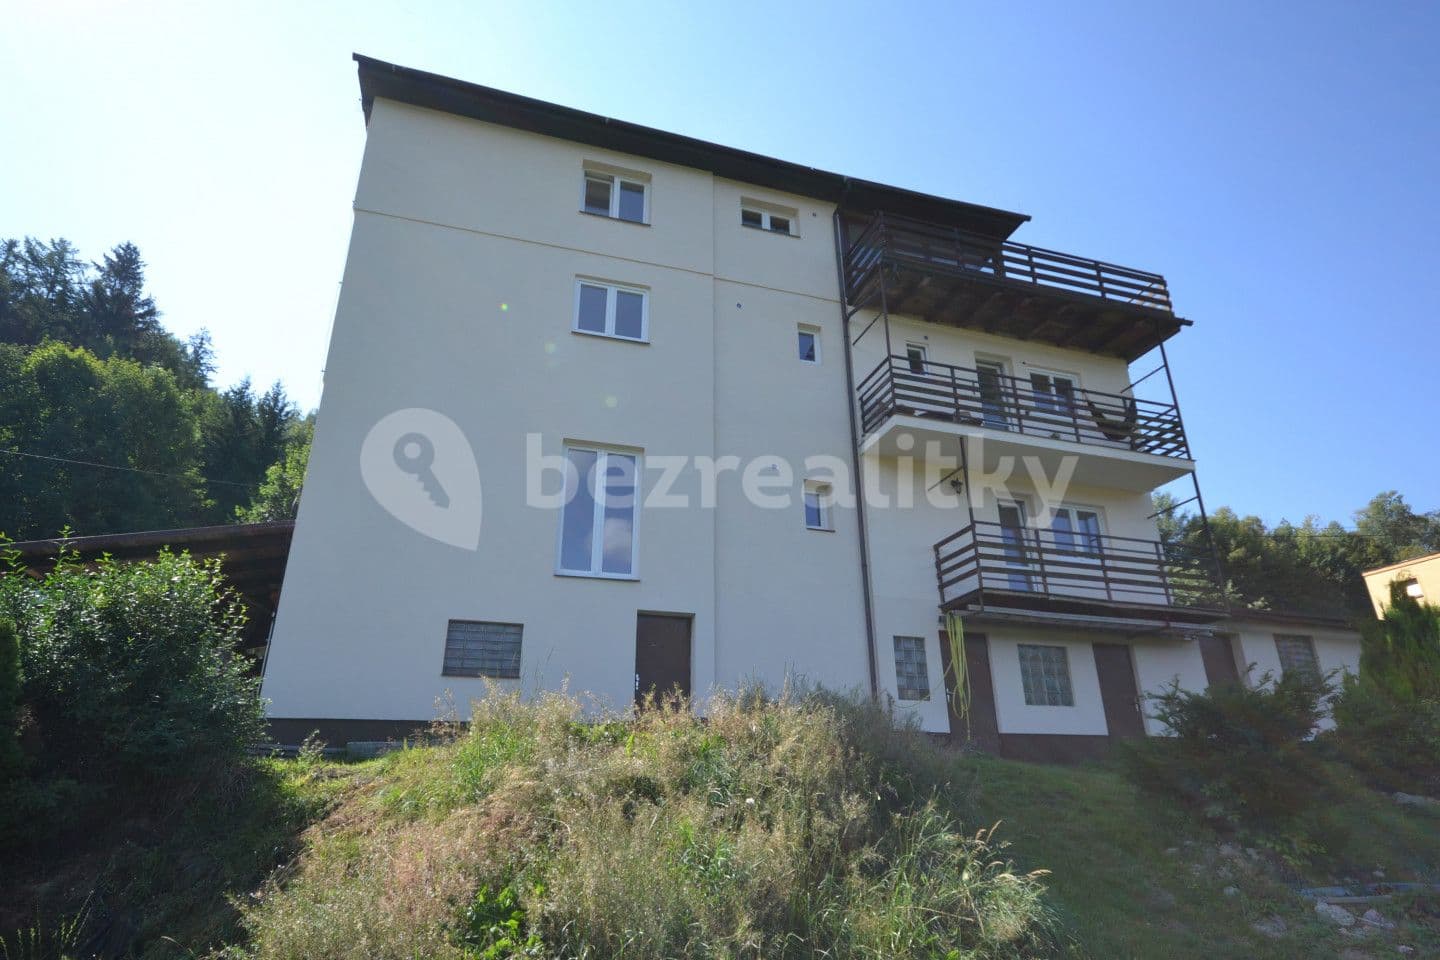 Predaj bytu 3-izbový 55 m², U Staré lípy, Jablonec nad Nisou, Liberecký kraj